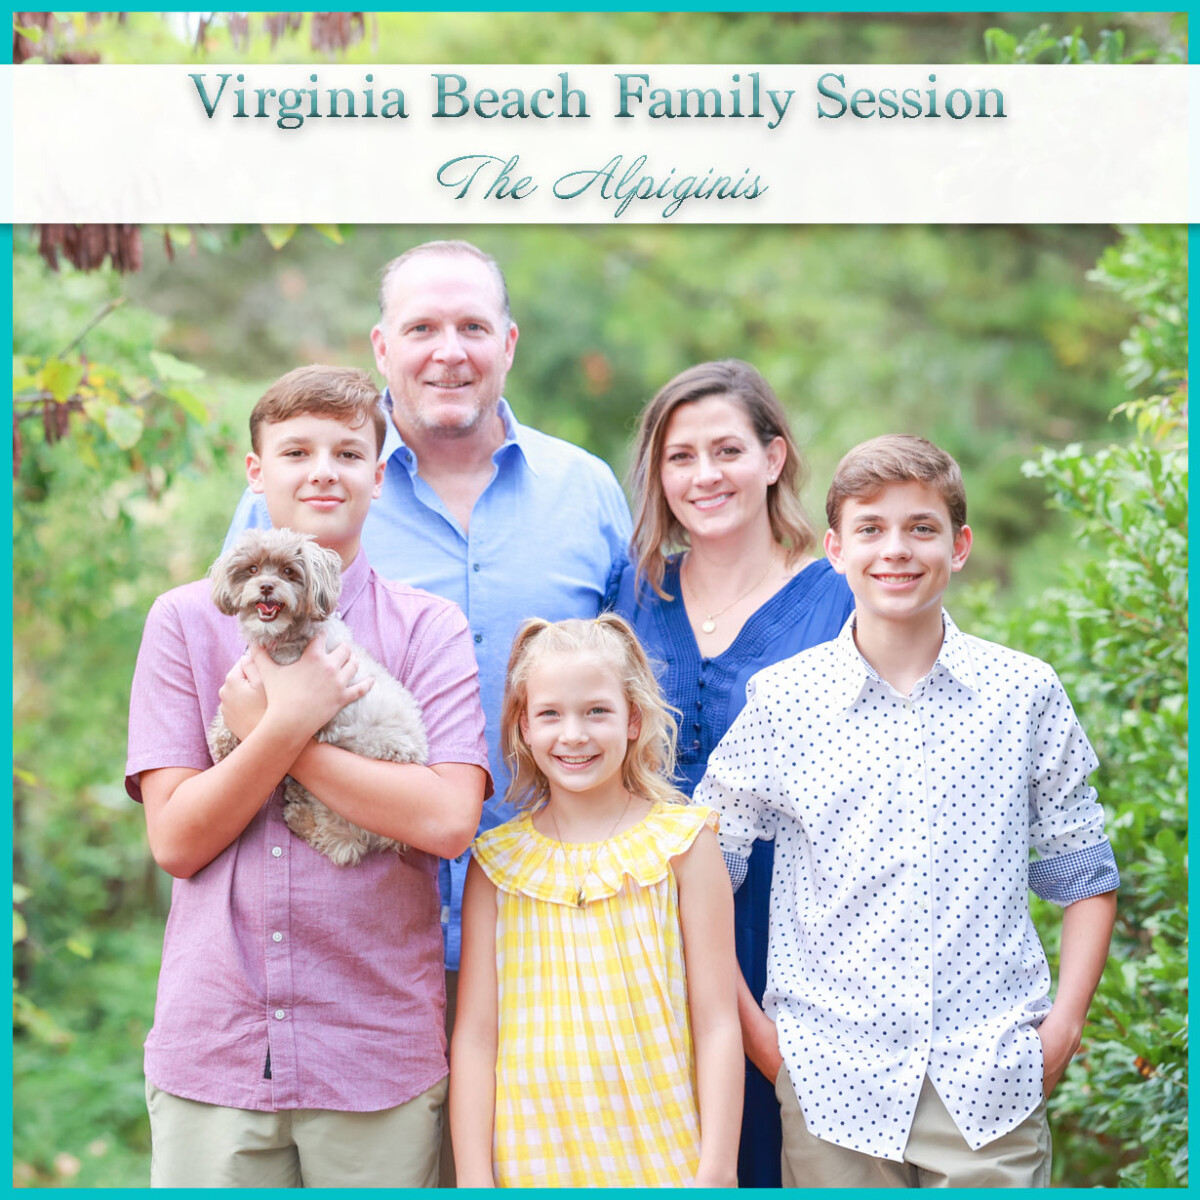 Virginia Beach Family Session | The Alpiginis - JudithsFreshLook.com